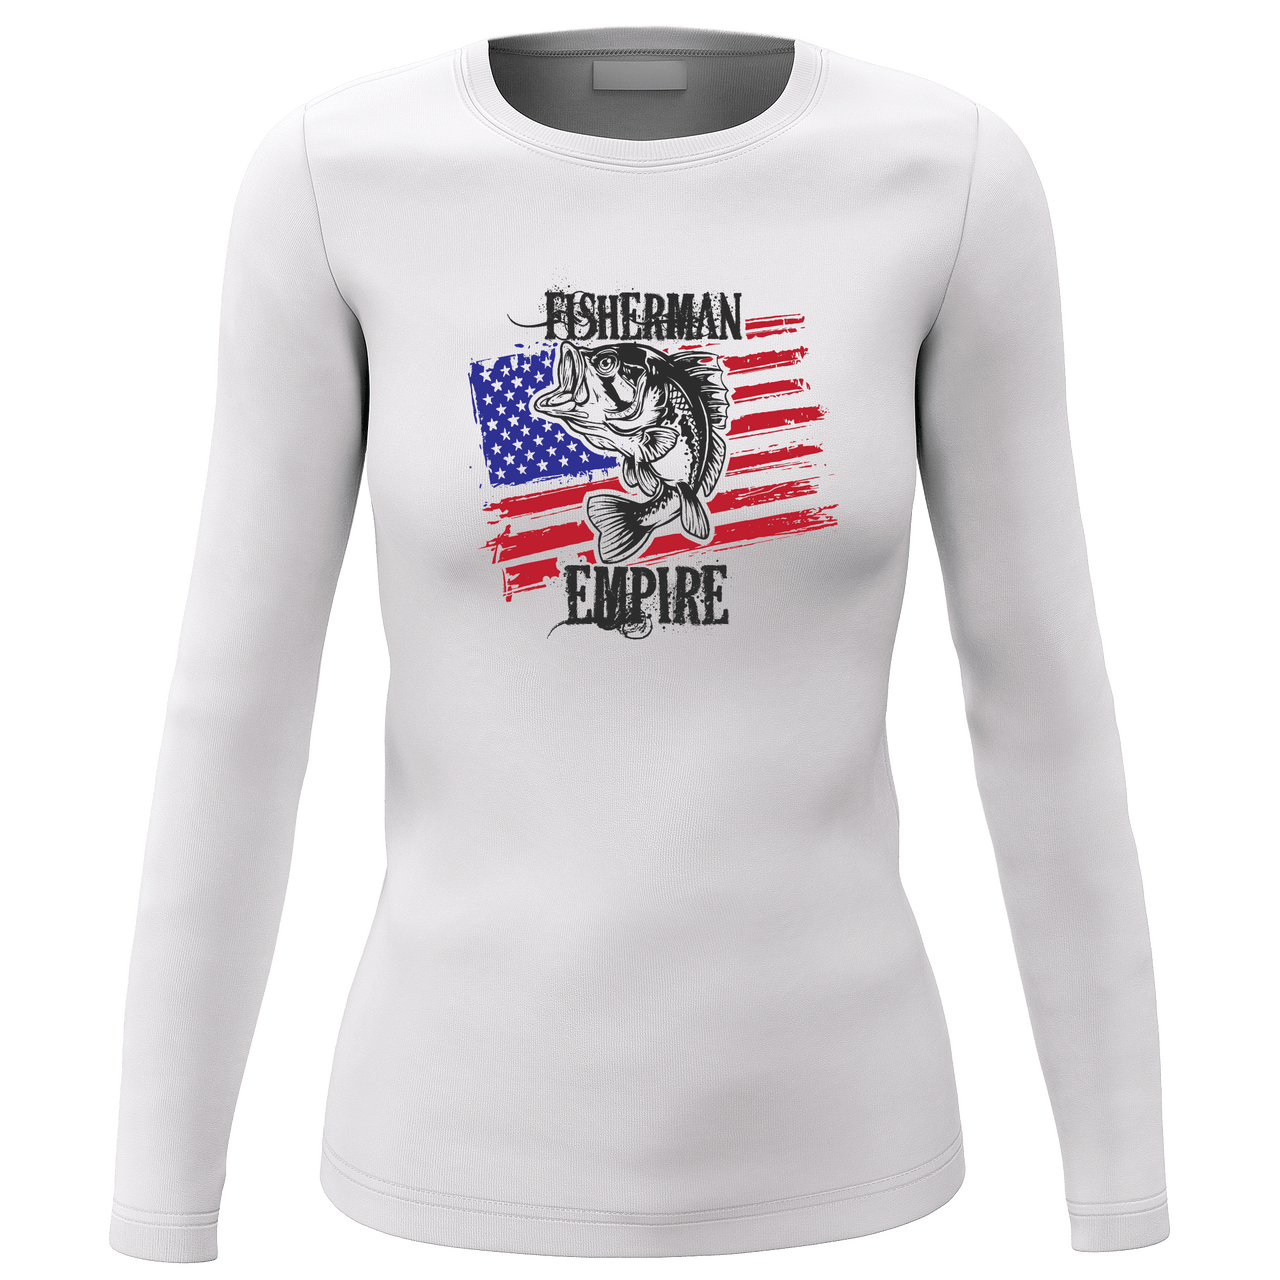 Fisherman American Empire Color Women Long Sleeve Shirt